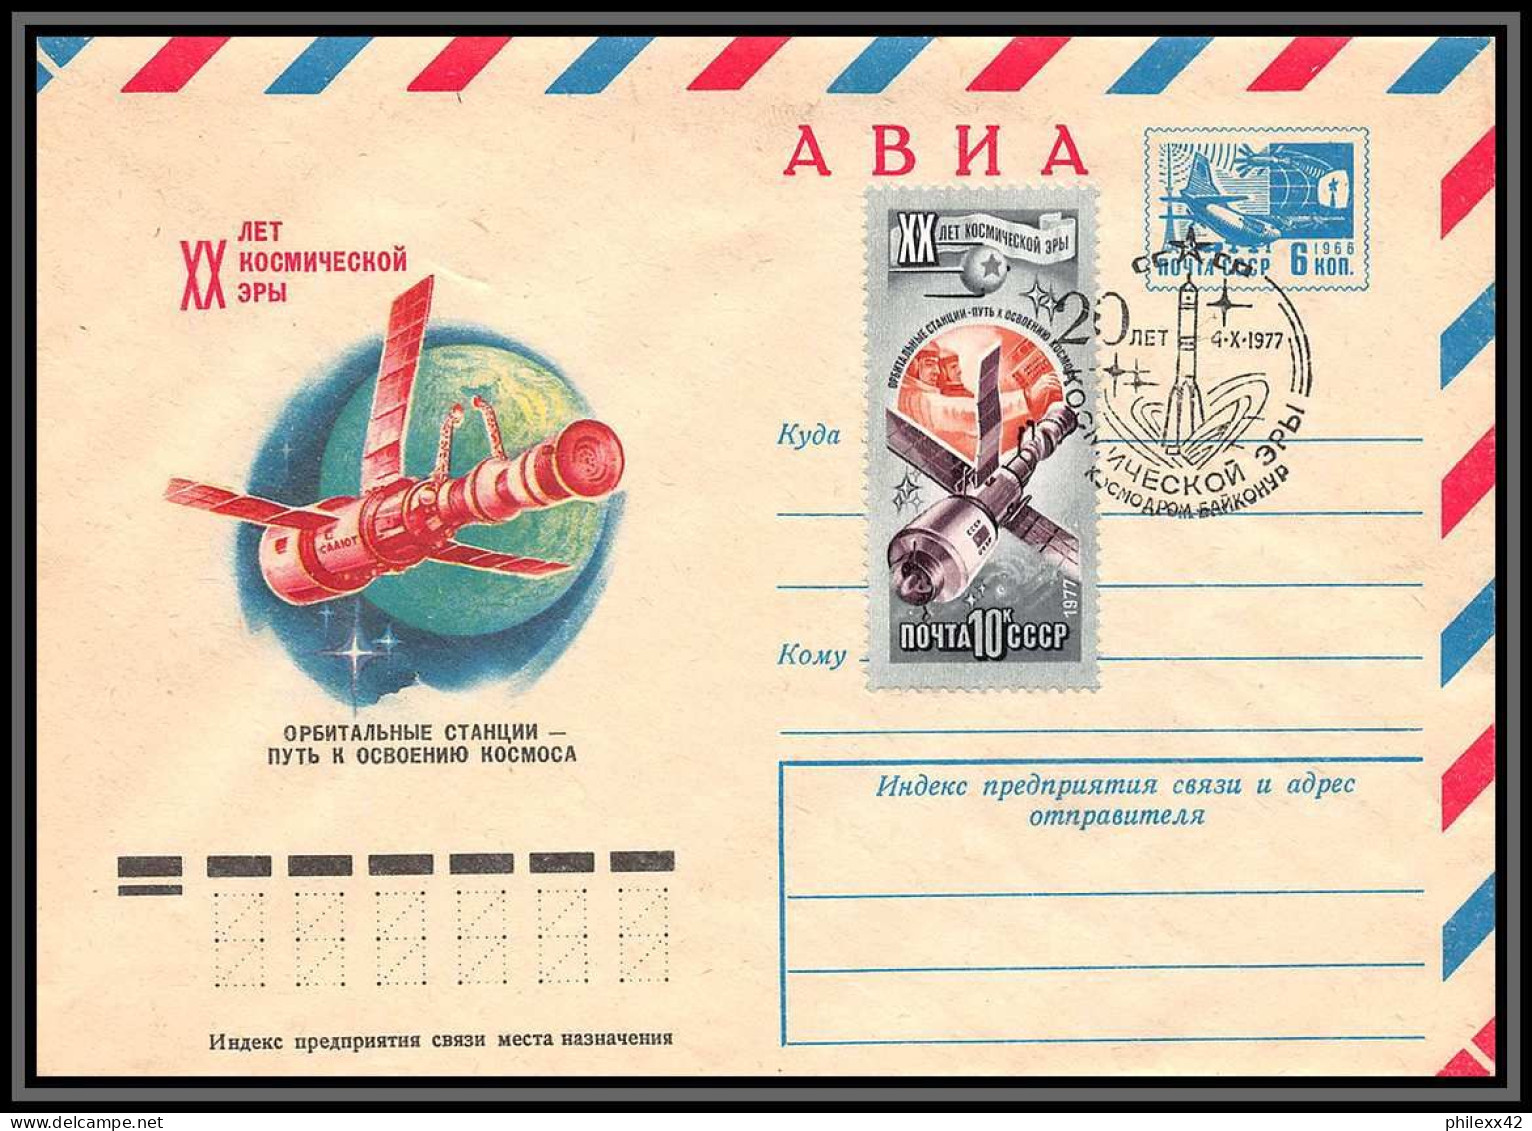 3392 Espace space Entier postal Stationery urss USSR 4404/4409 Gagarine Gagarin soyuz soyouz 4/10/1977 fdc + timbres